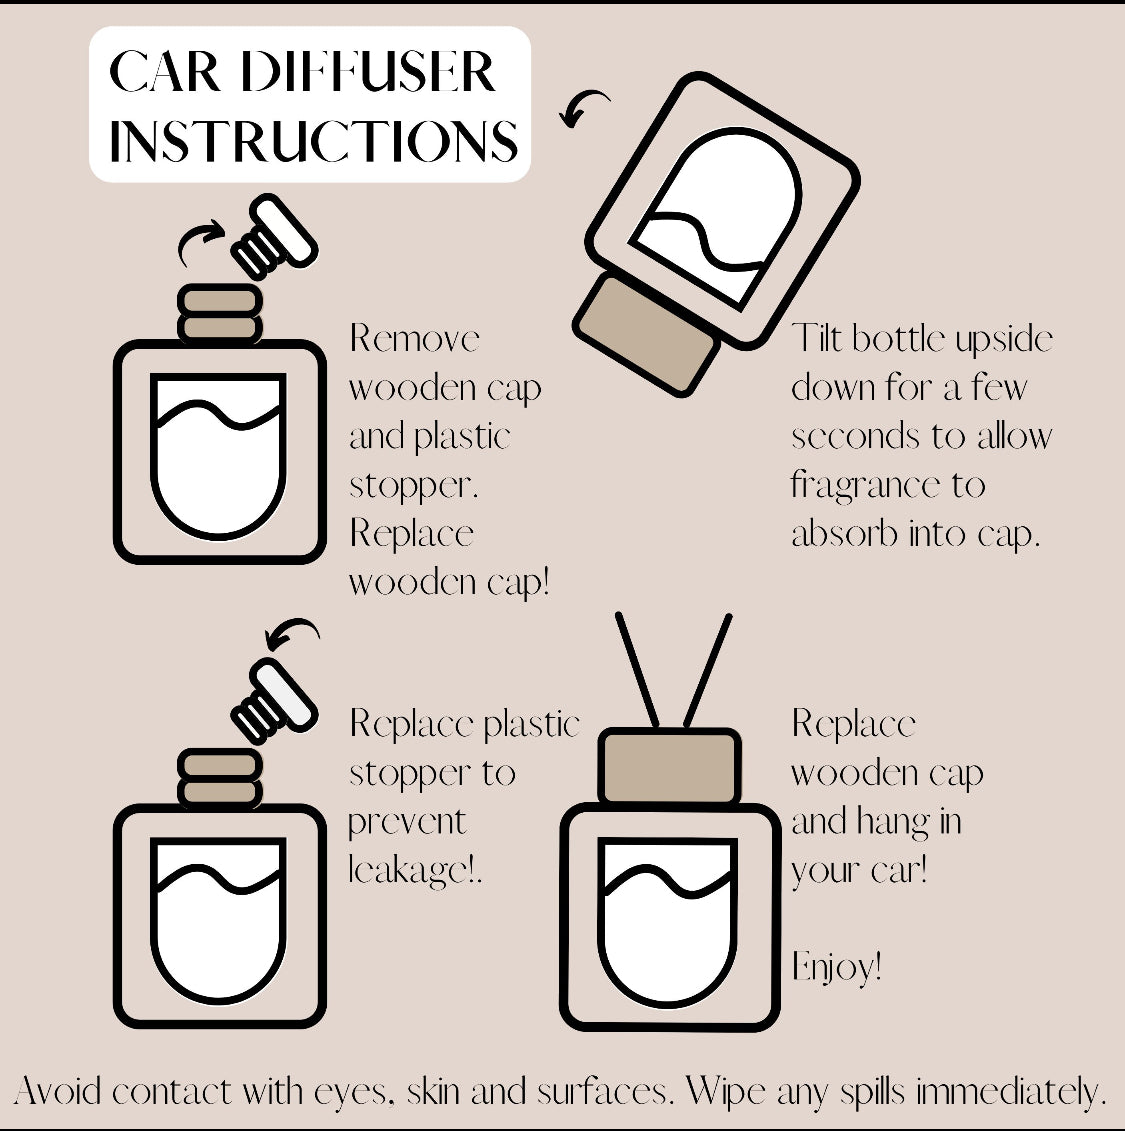 Hanging car scent diffuser